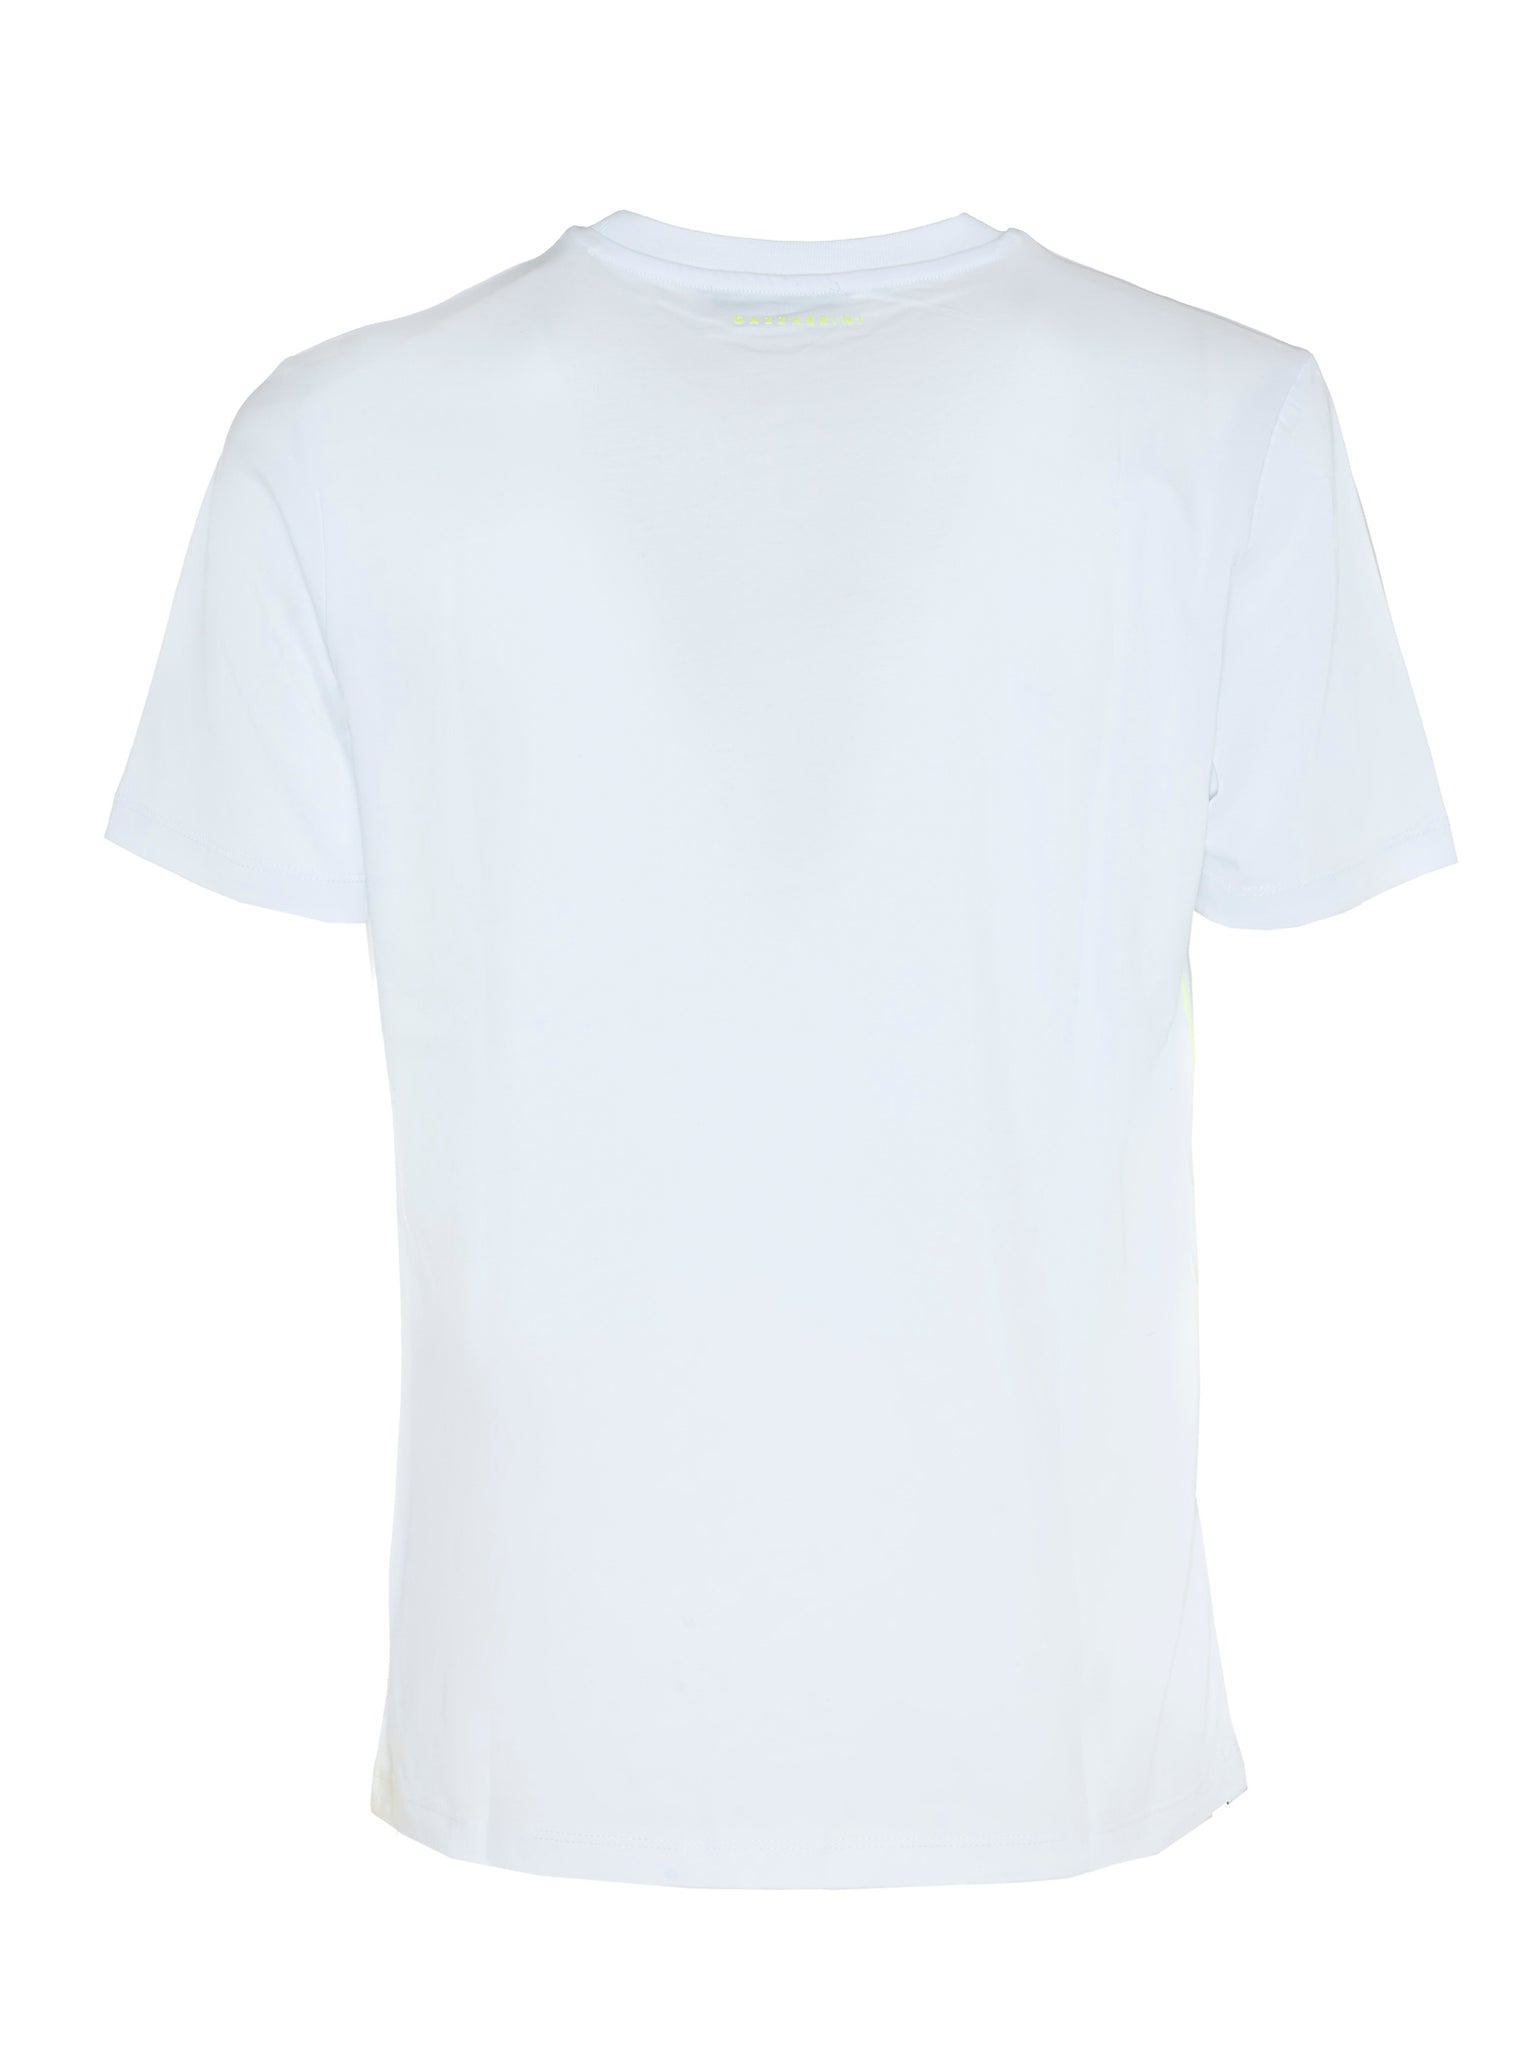 T-shirt bianca in cotone con stampa / Bianco - Ideal Moda